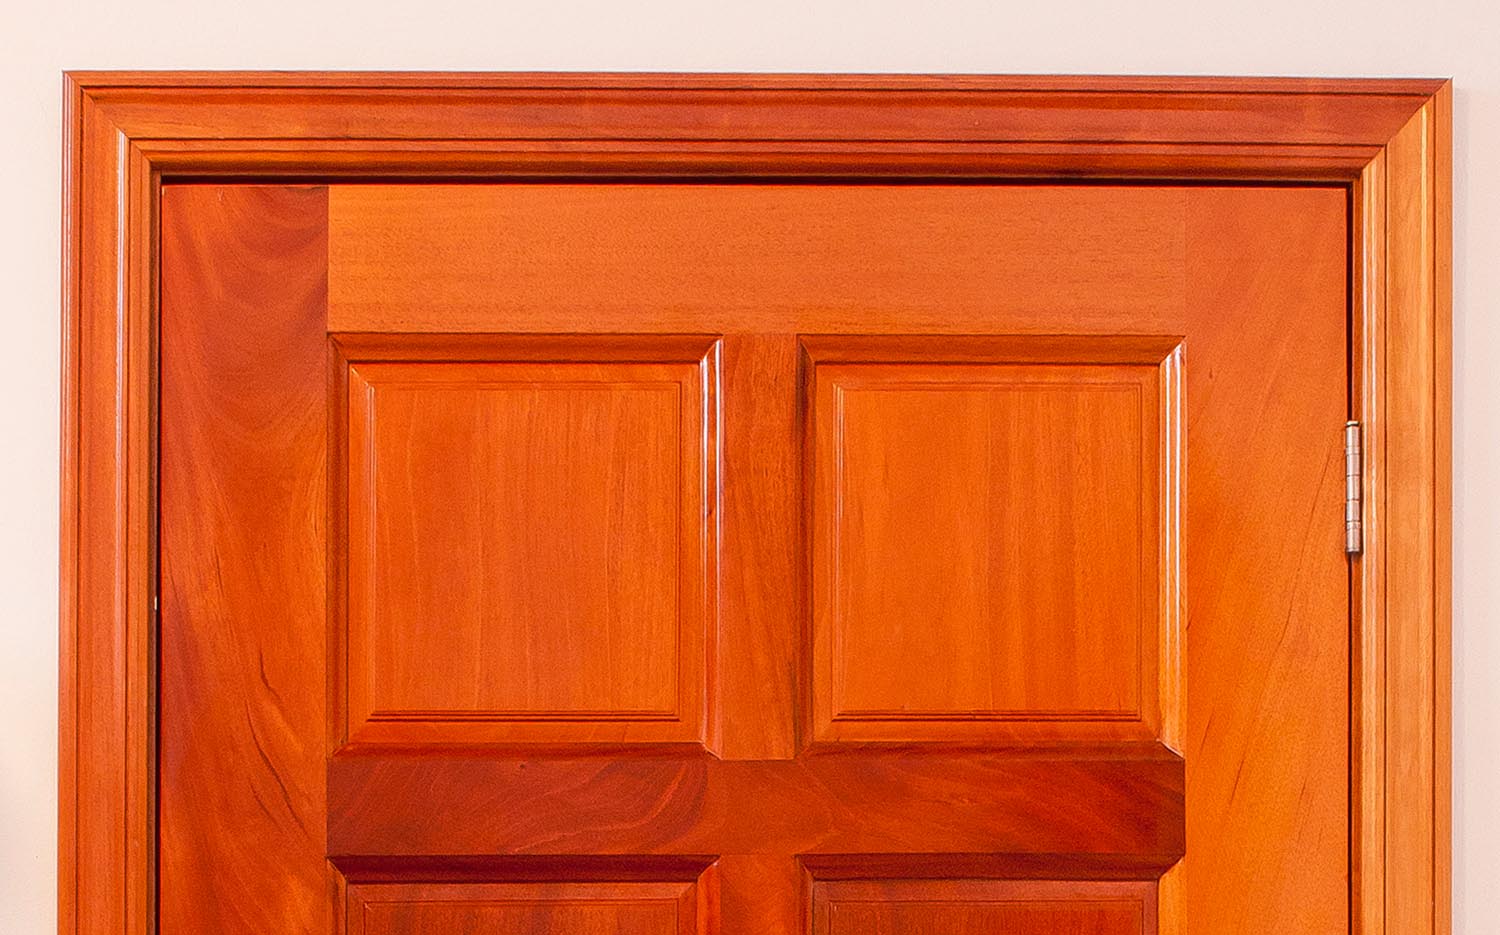 Standard six panel walk-through door, natural finish, figured mahogany